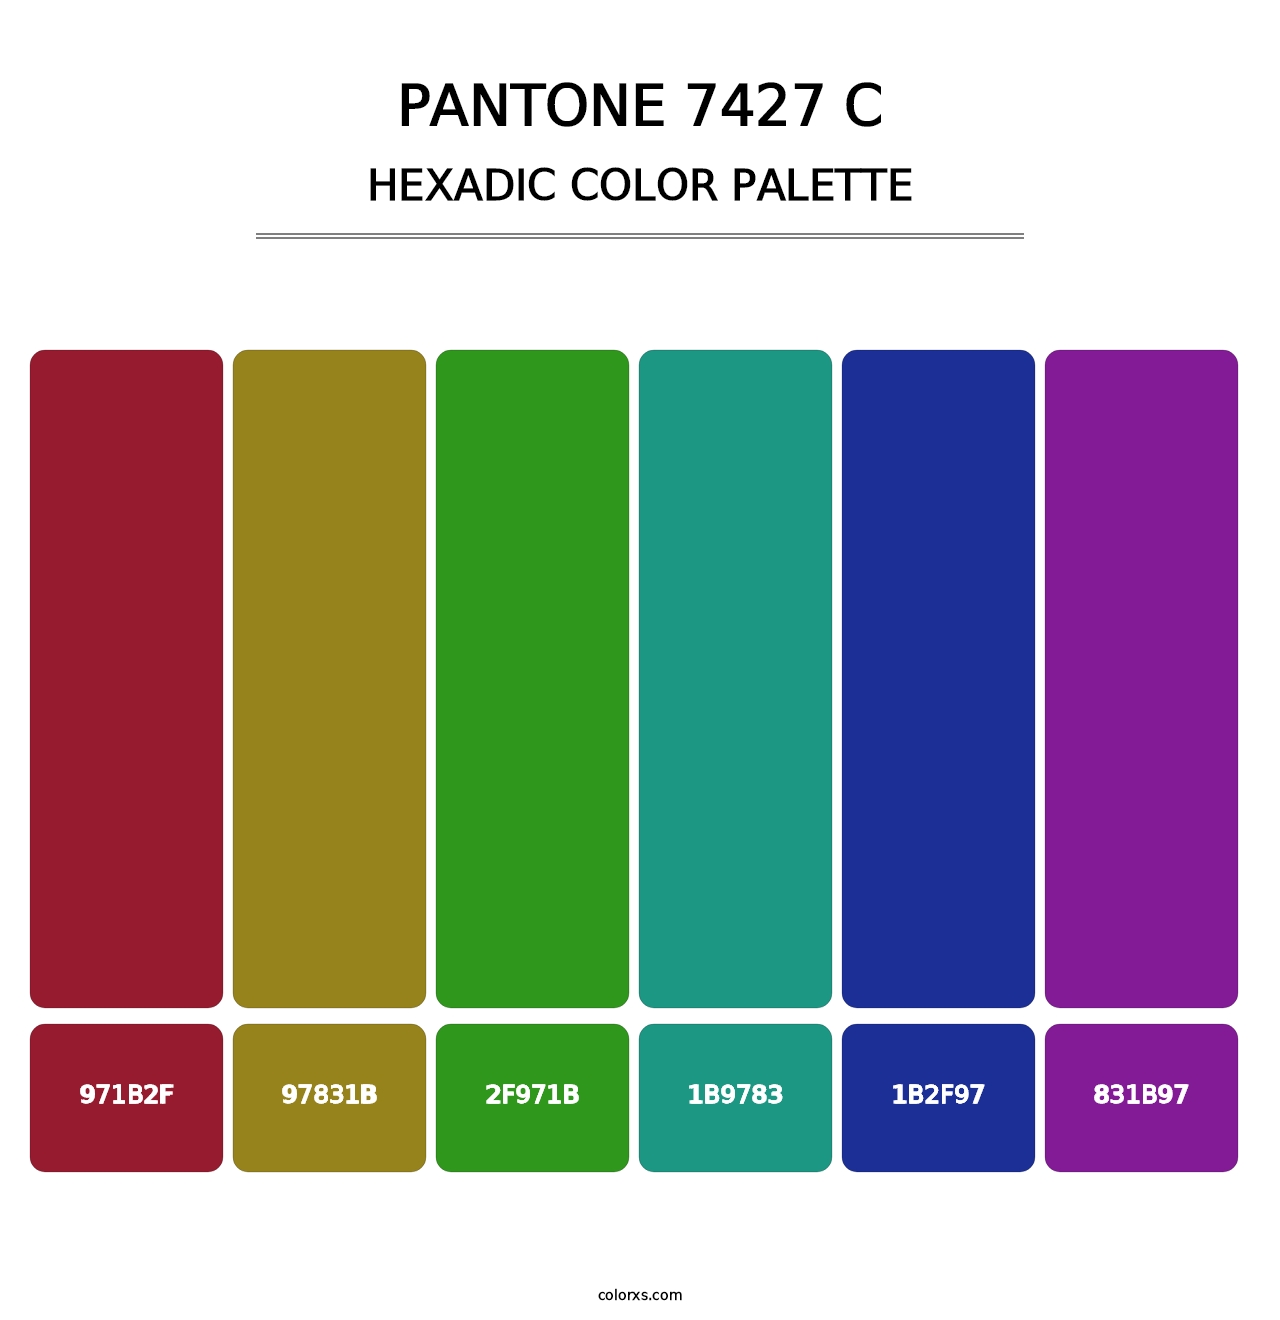 PANTONE 7427 C - Hexadic Color Palette